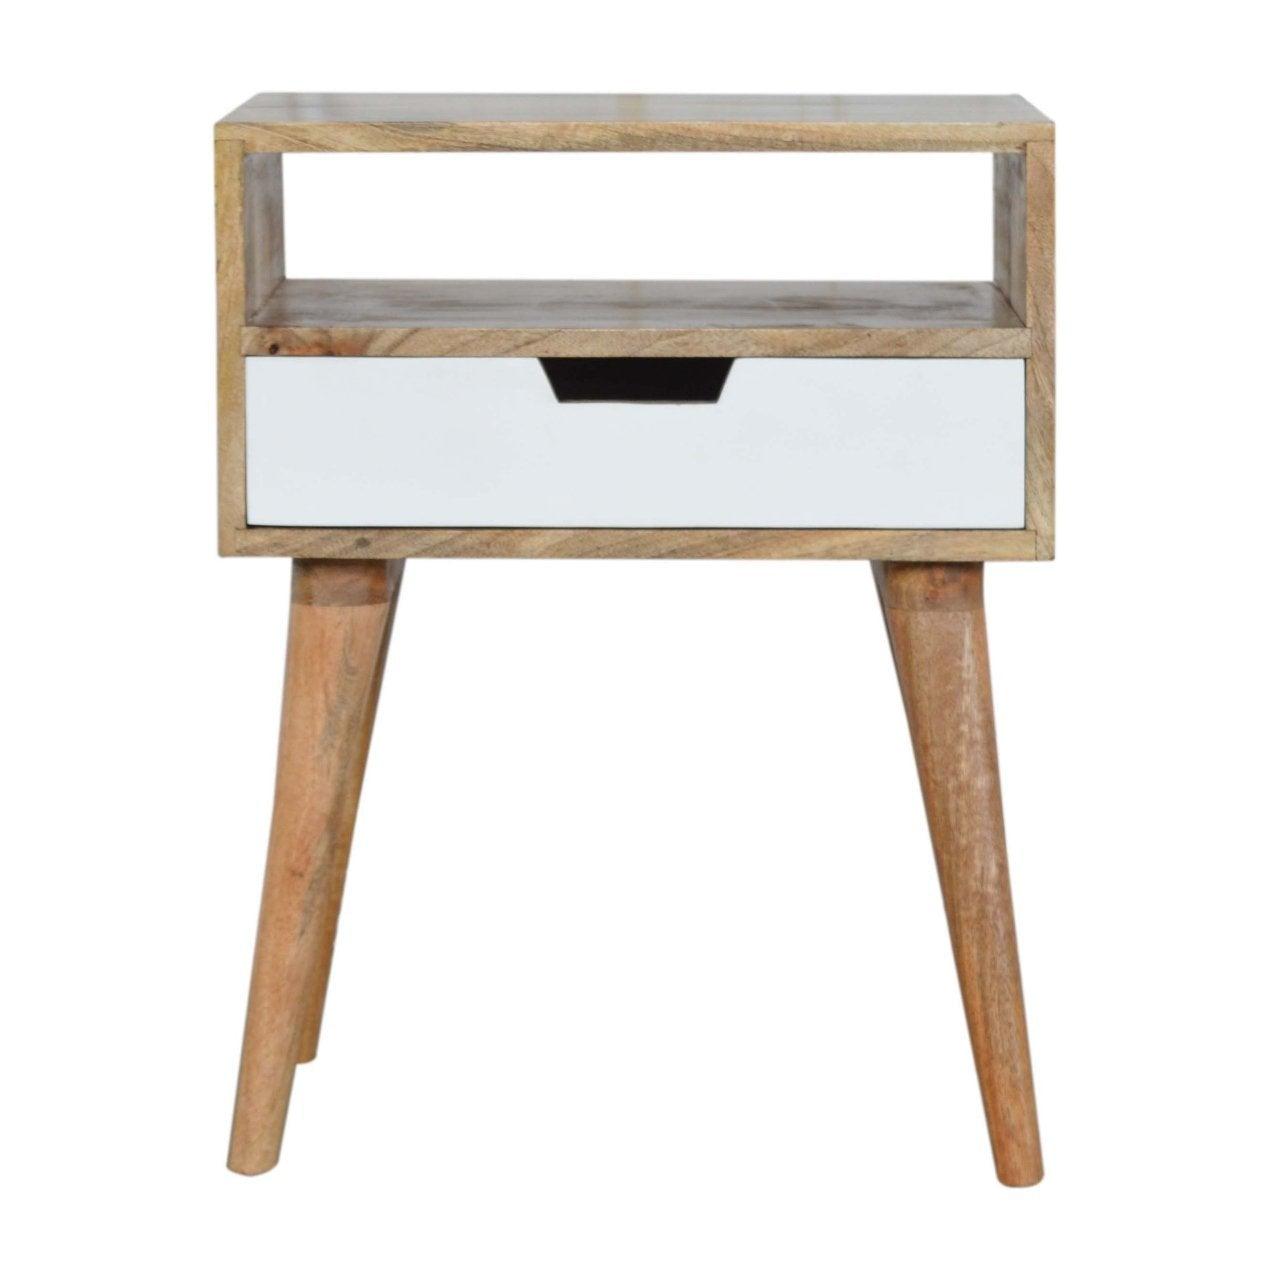 White painted drawer bedside table - crimblefest furniture - image 1